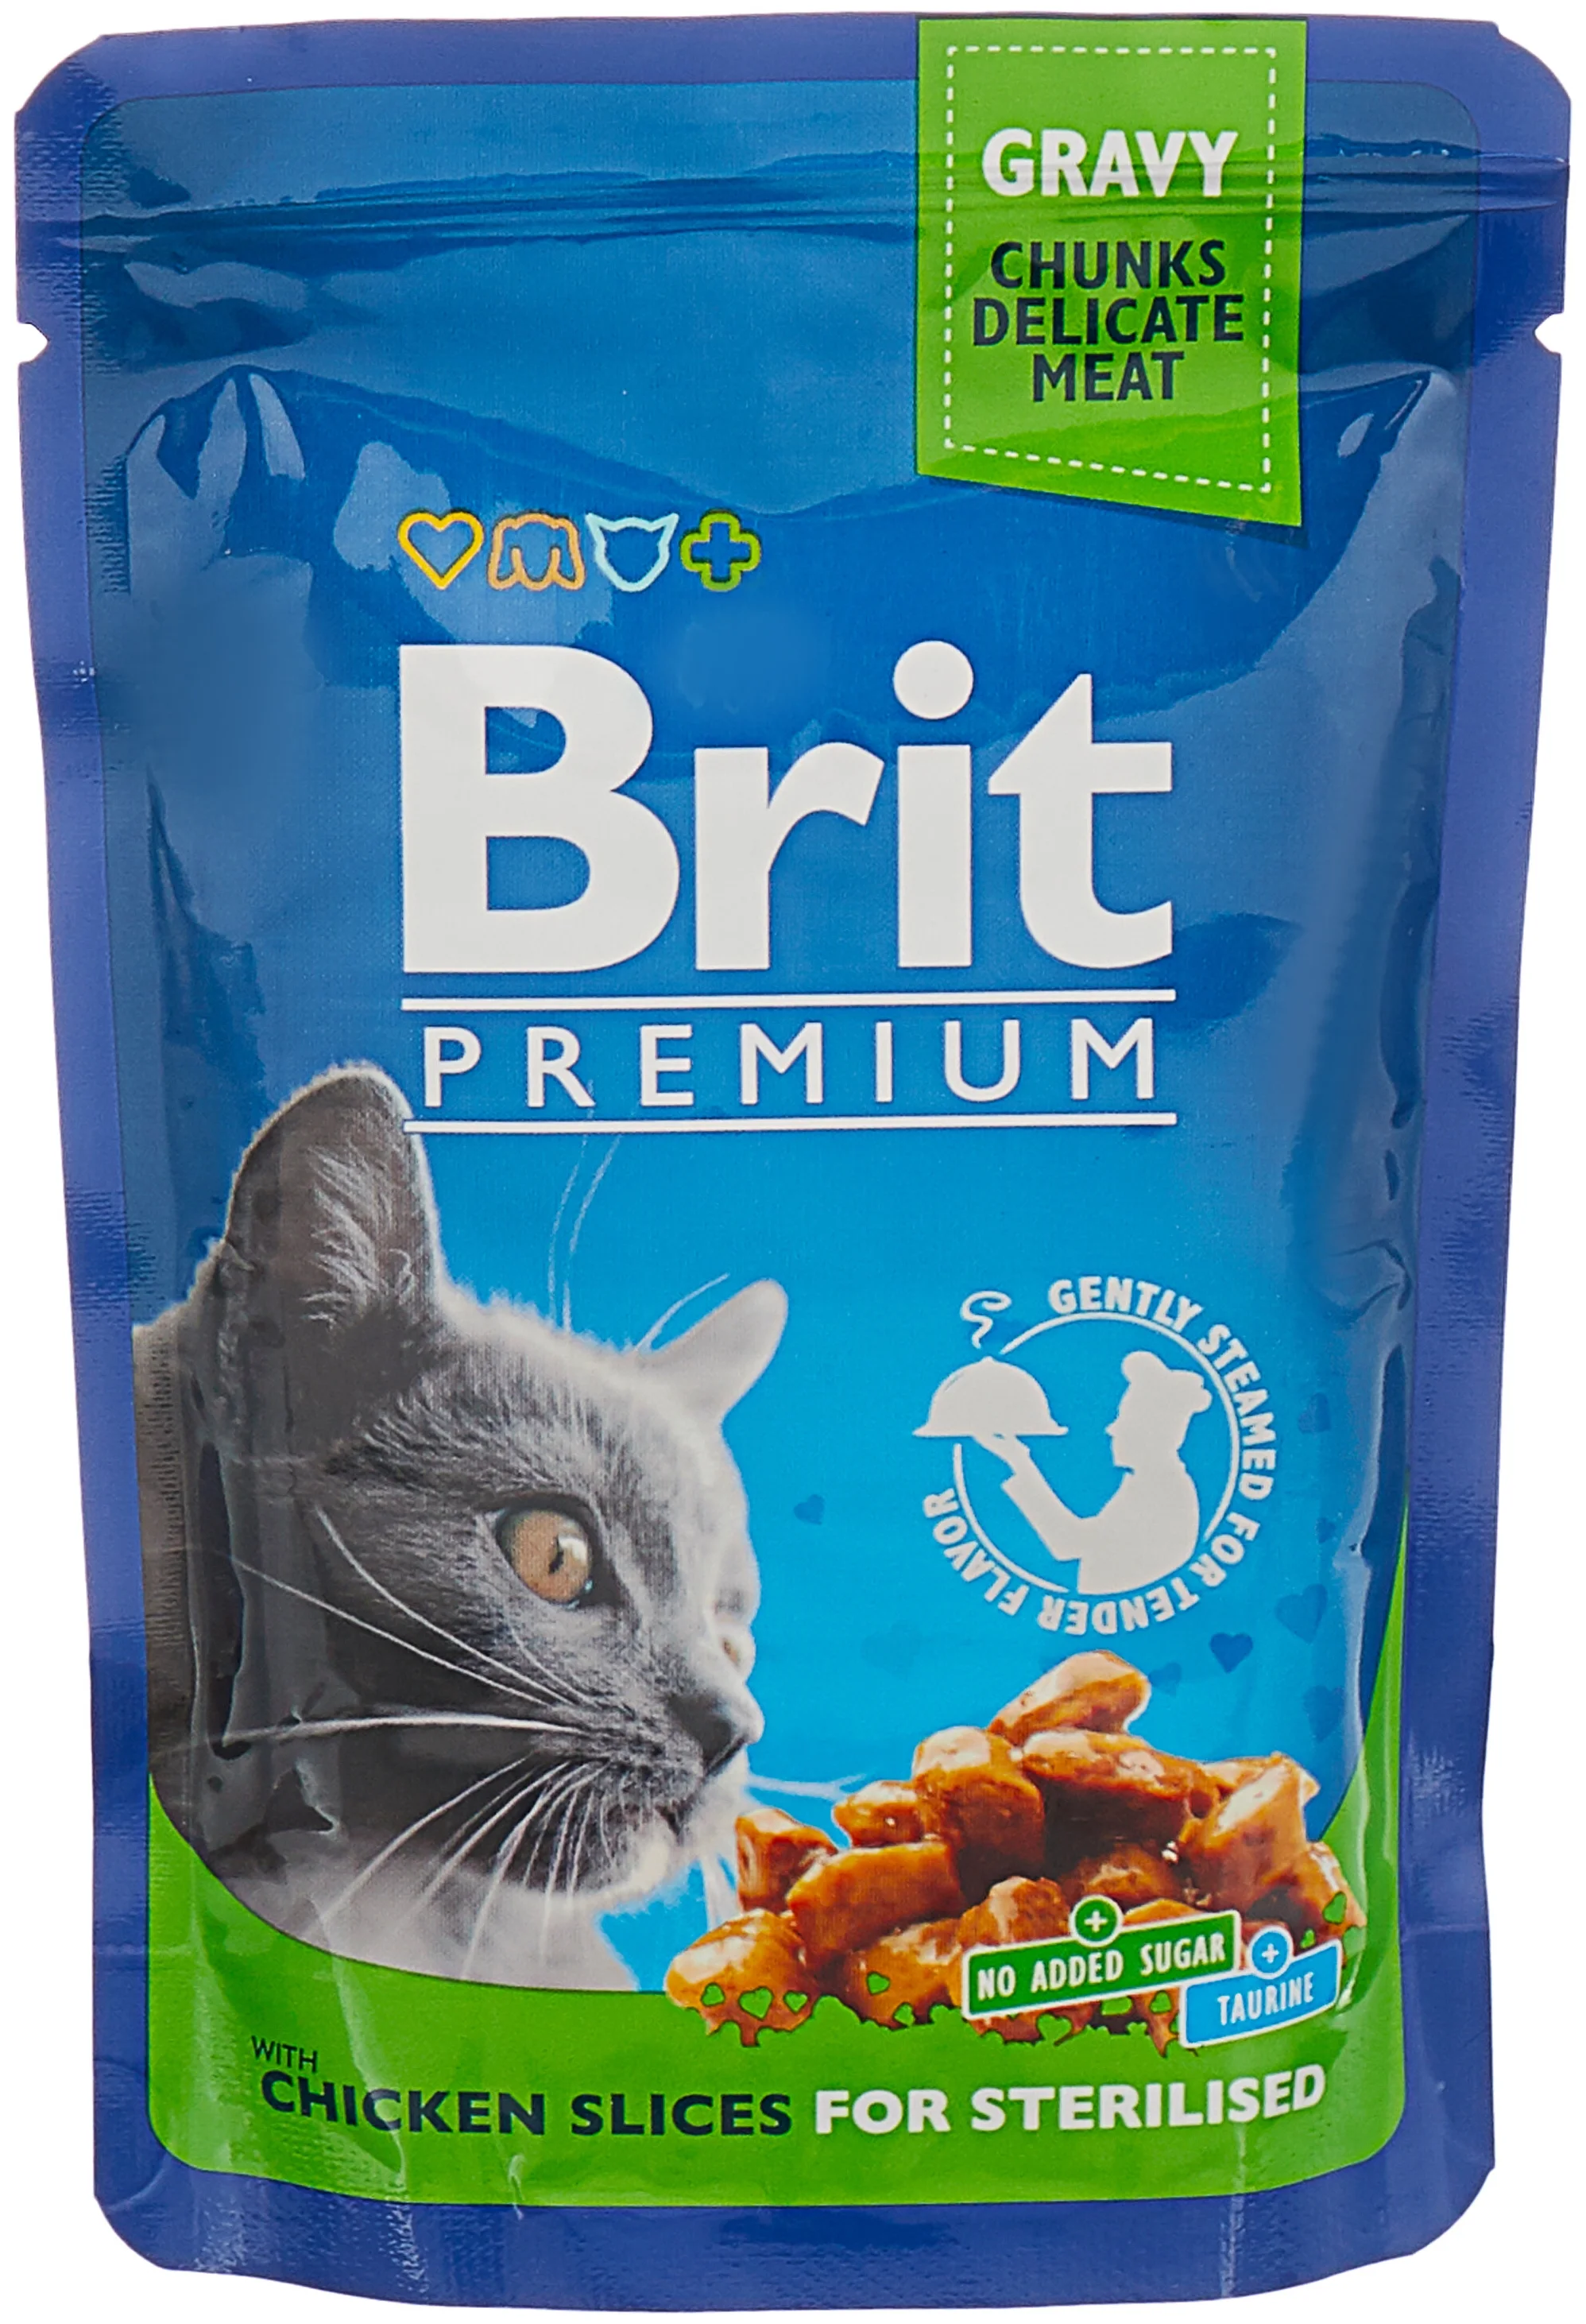 Brit Premium - класс ингредиентов: премиум